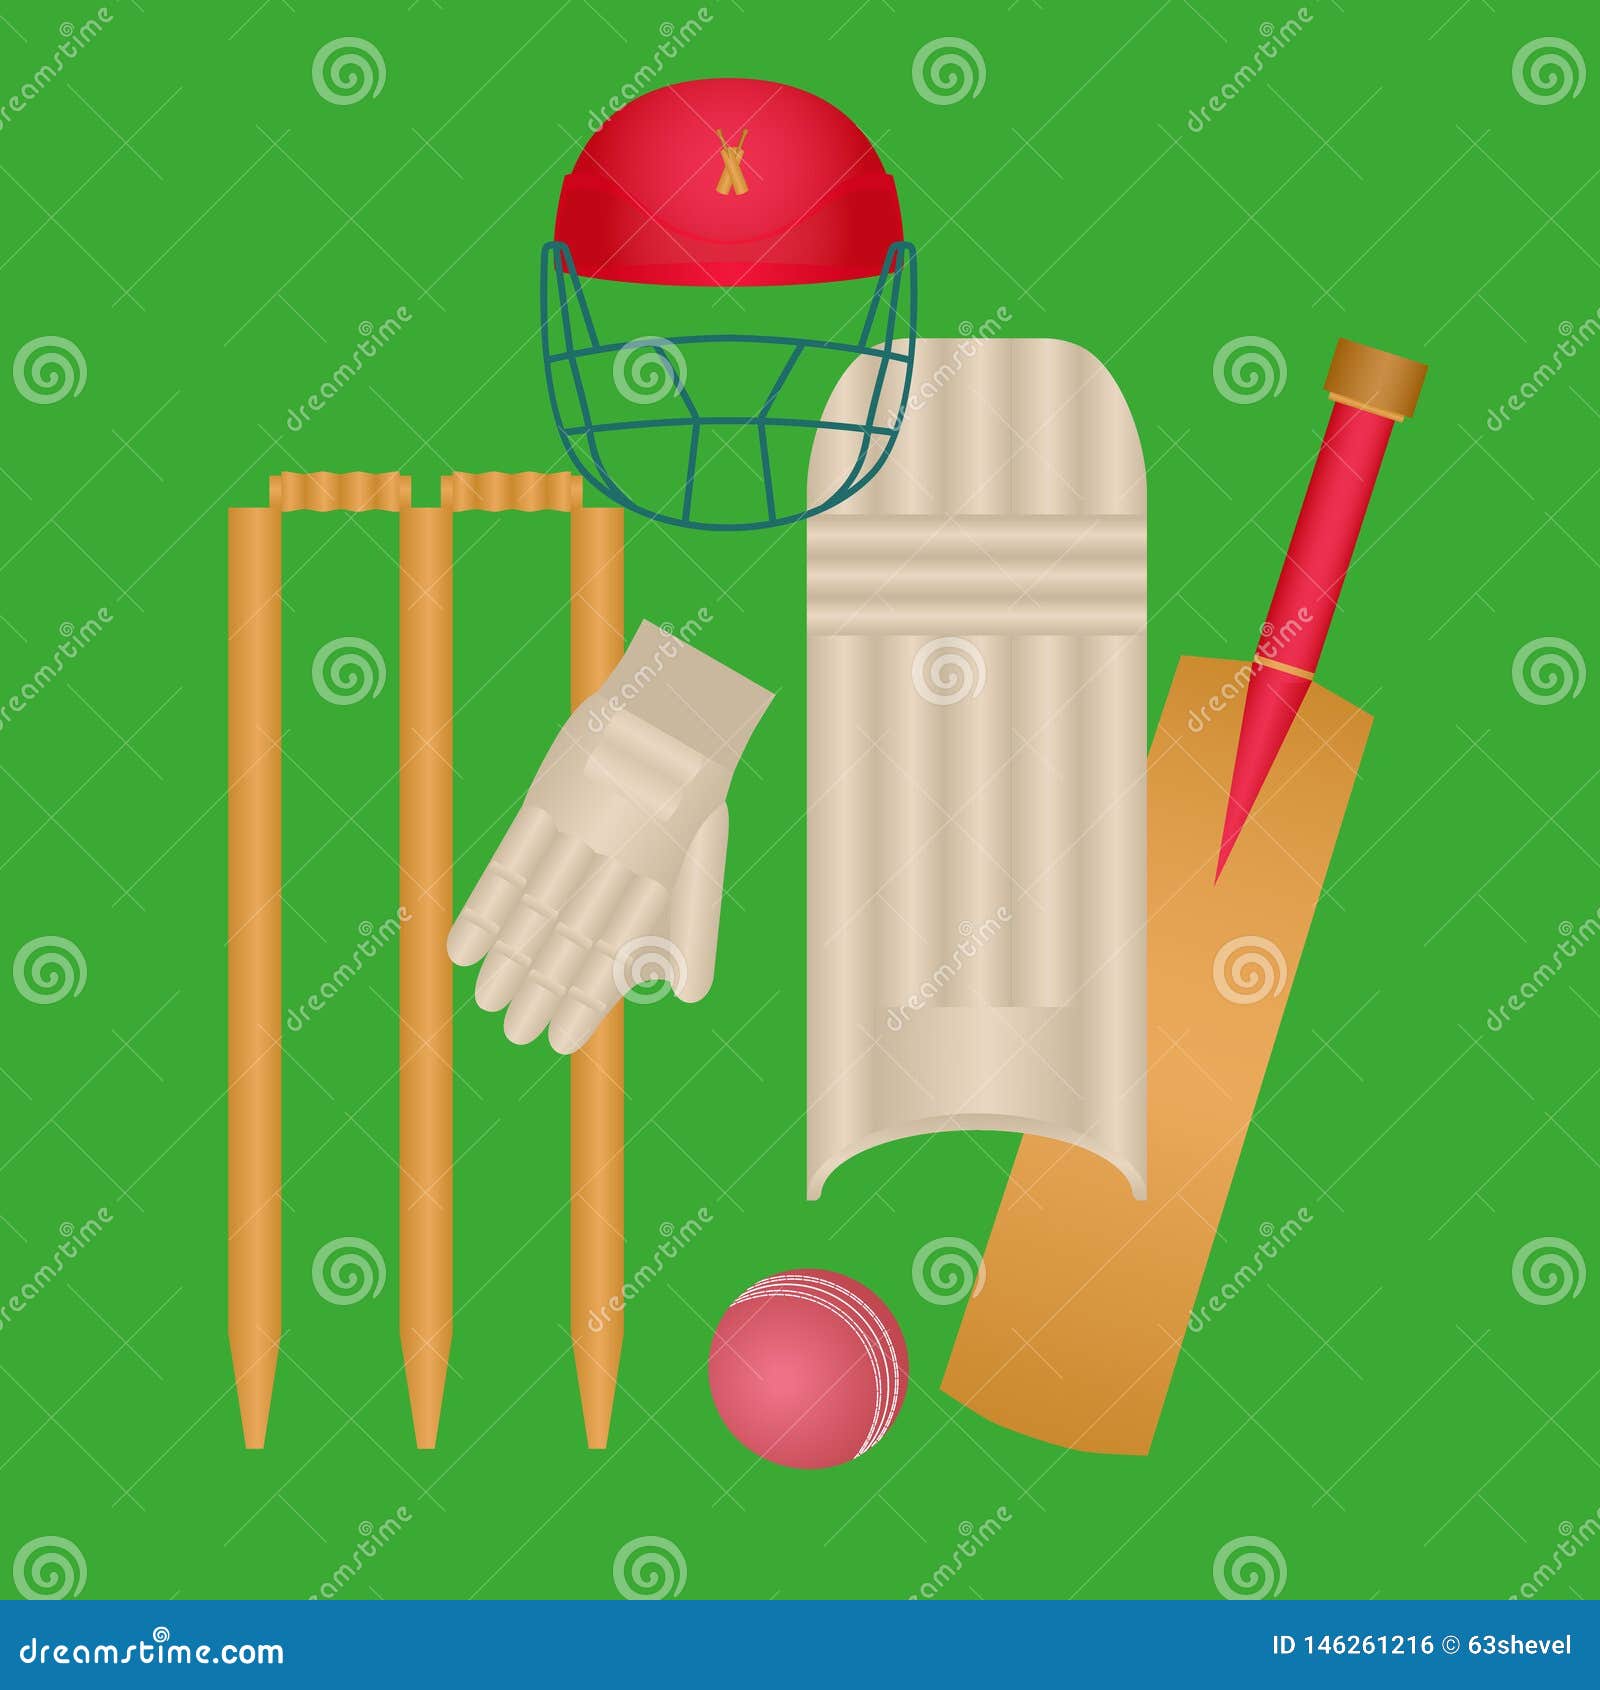 Cricket Icons Set Vector. Cricketer Accessories. Bat, Gloves, Helmet, Ball.  Isolated Flat Cartoon Illustration Stock Vector - Illustration of guard,  game: 146261216